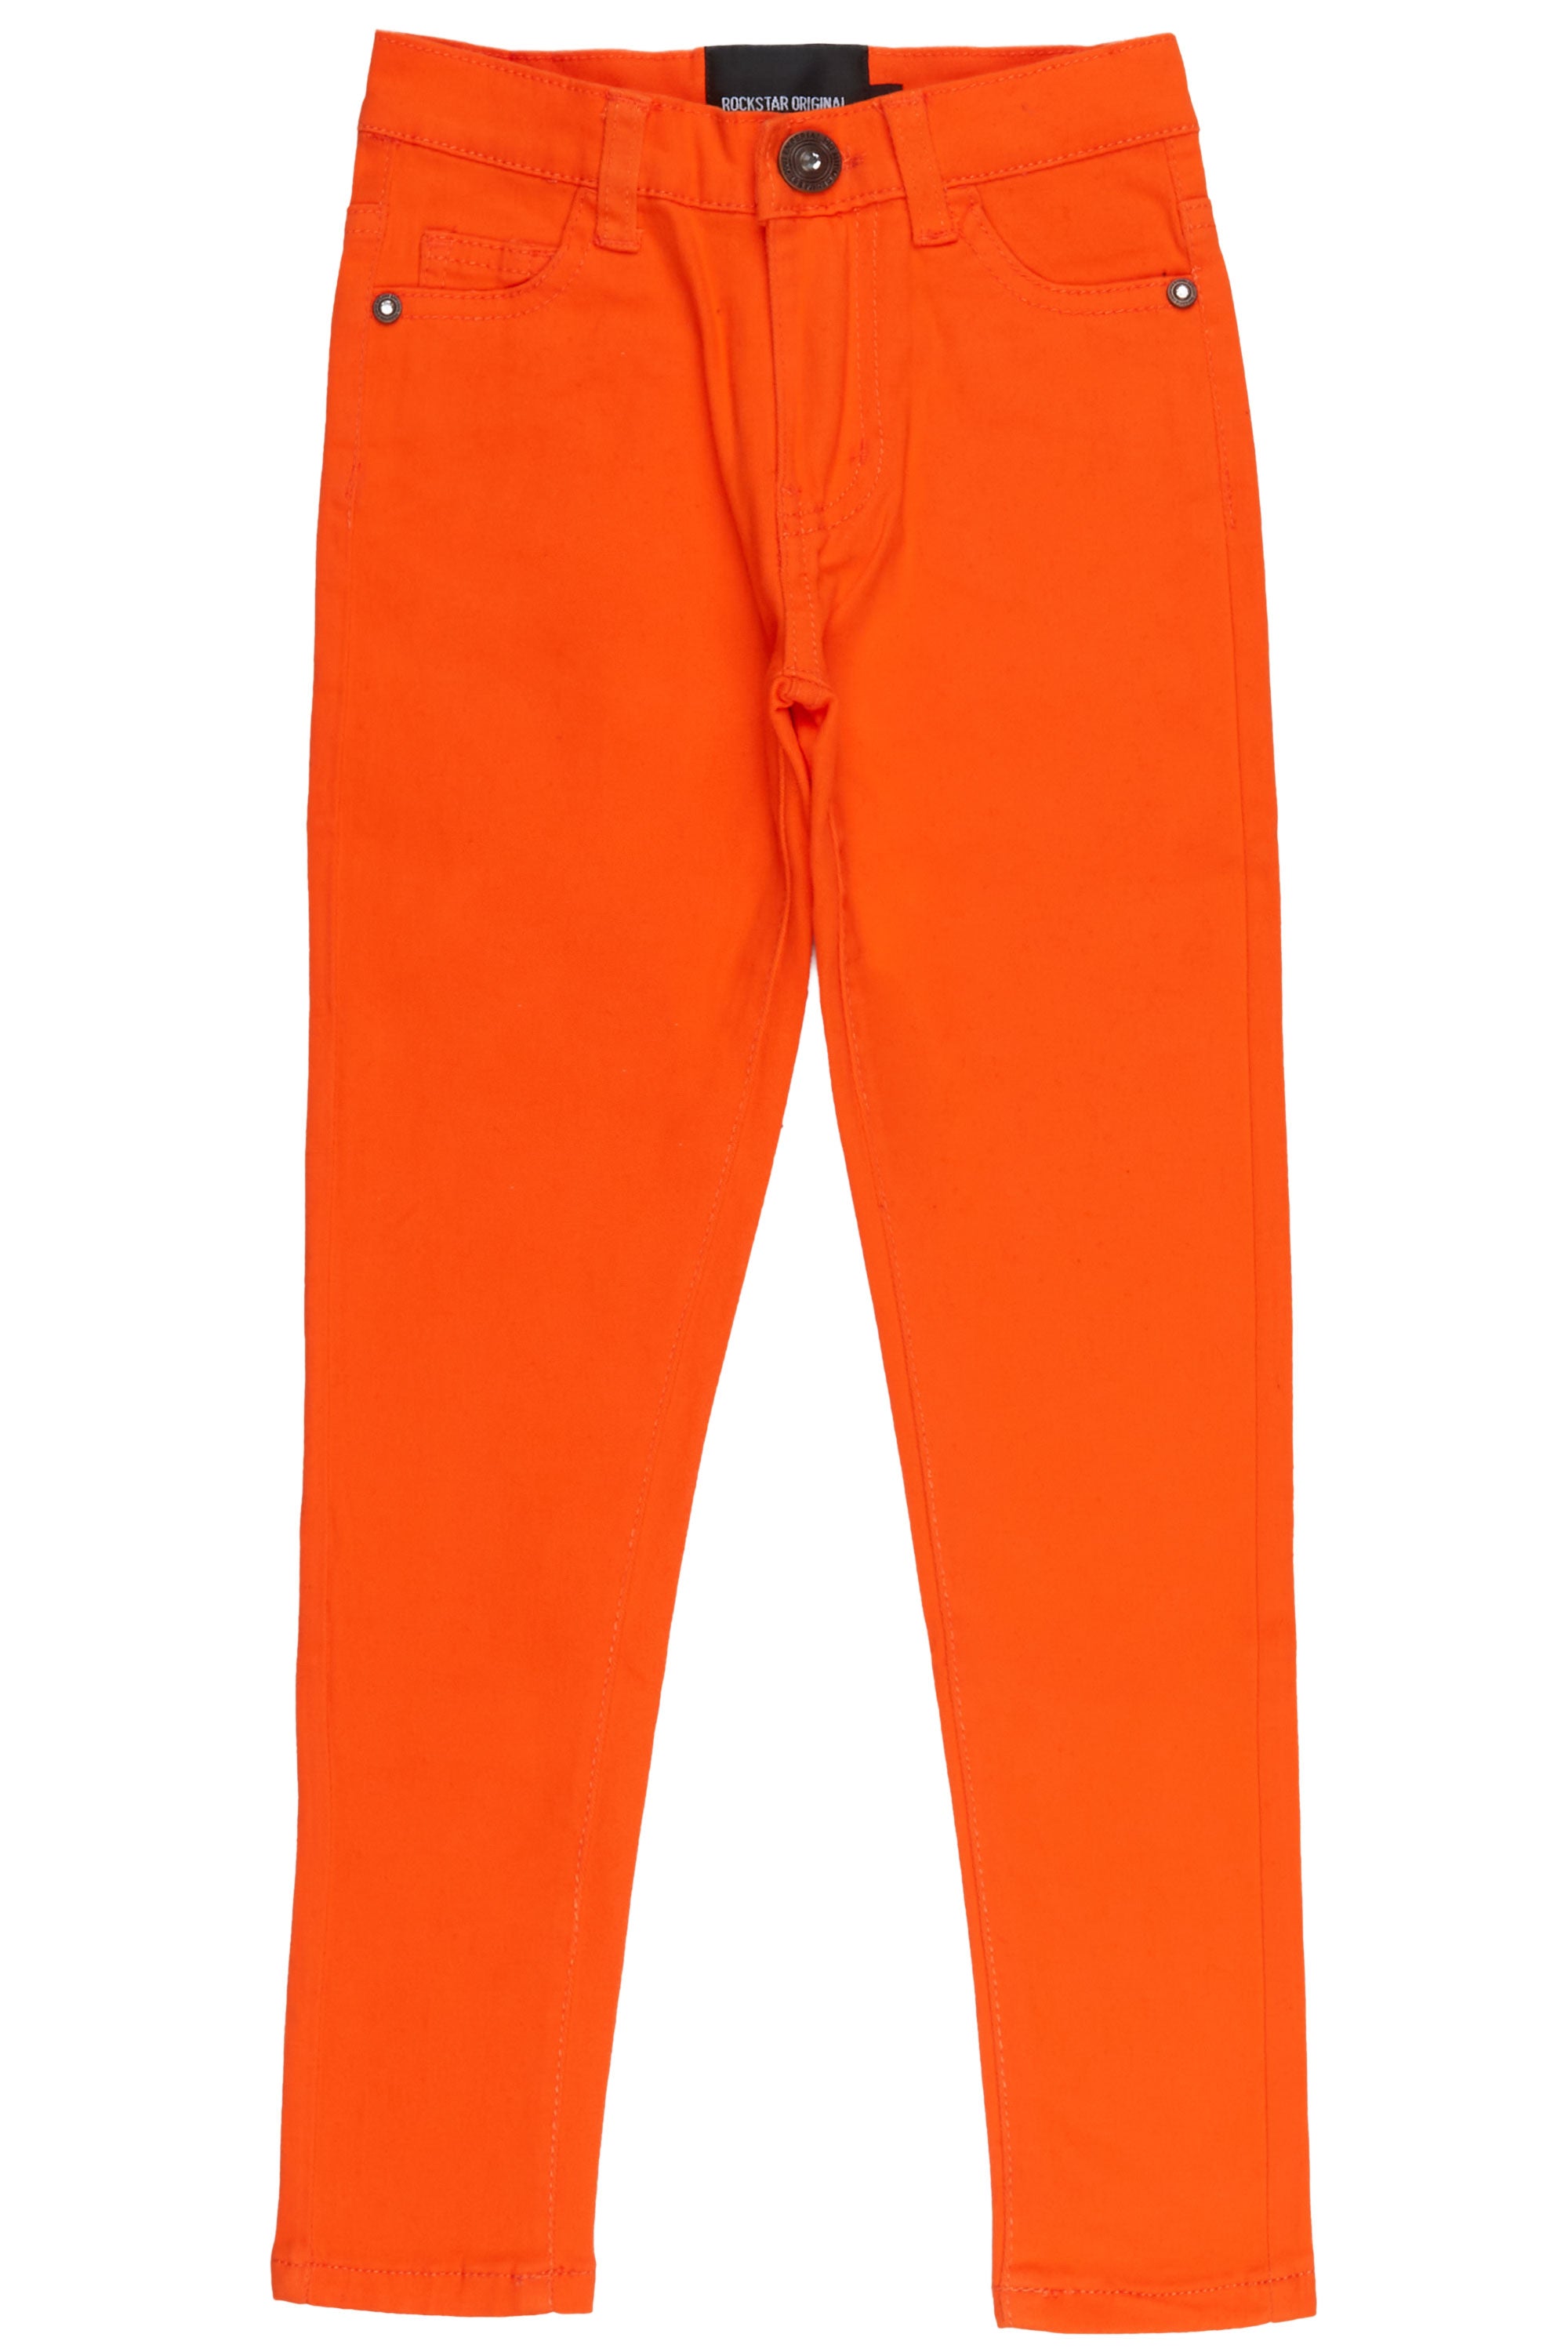 Girls Shyla Orange 5 Pocket Jean